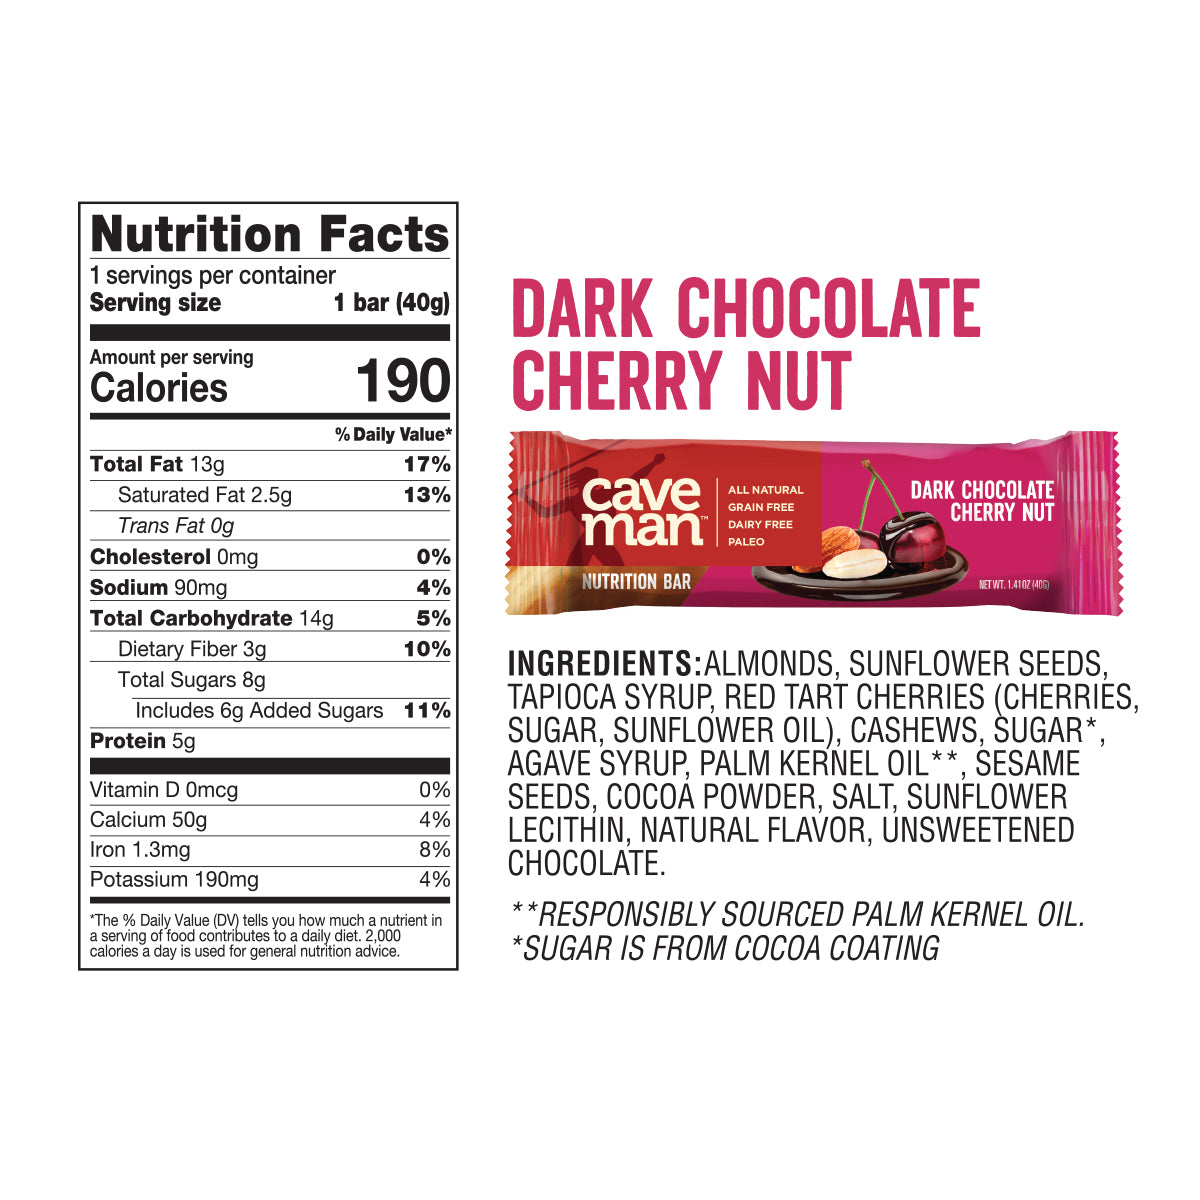 Dark Chocolate Cherry Nut Nutrition Bars by Caveman Foods